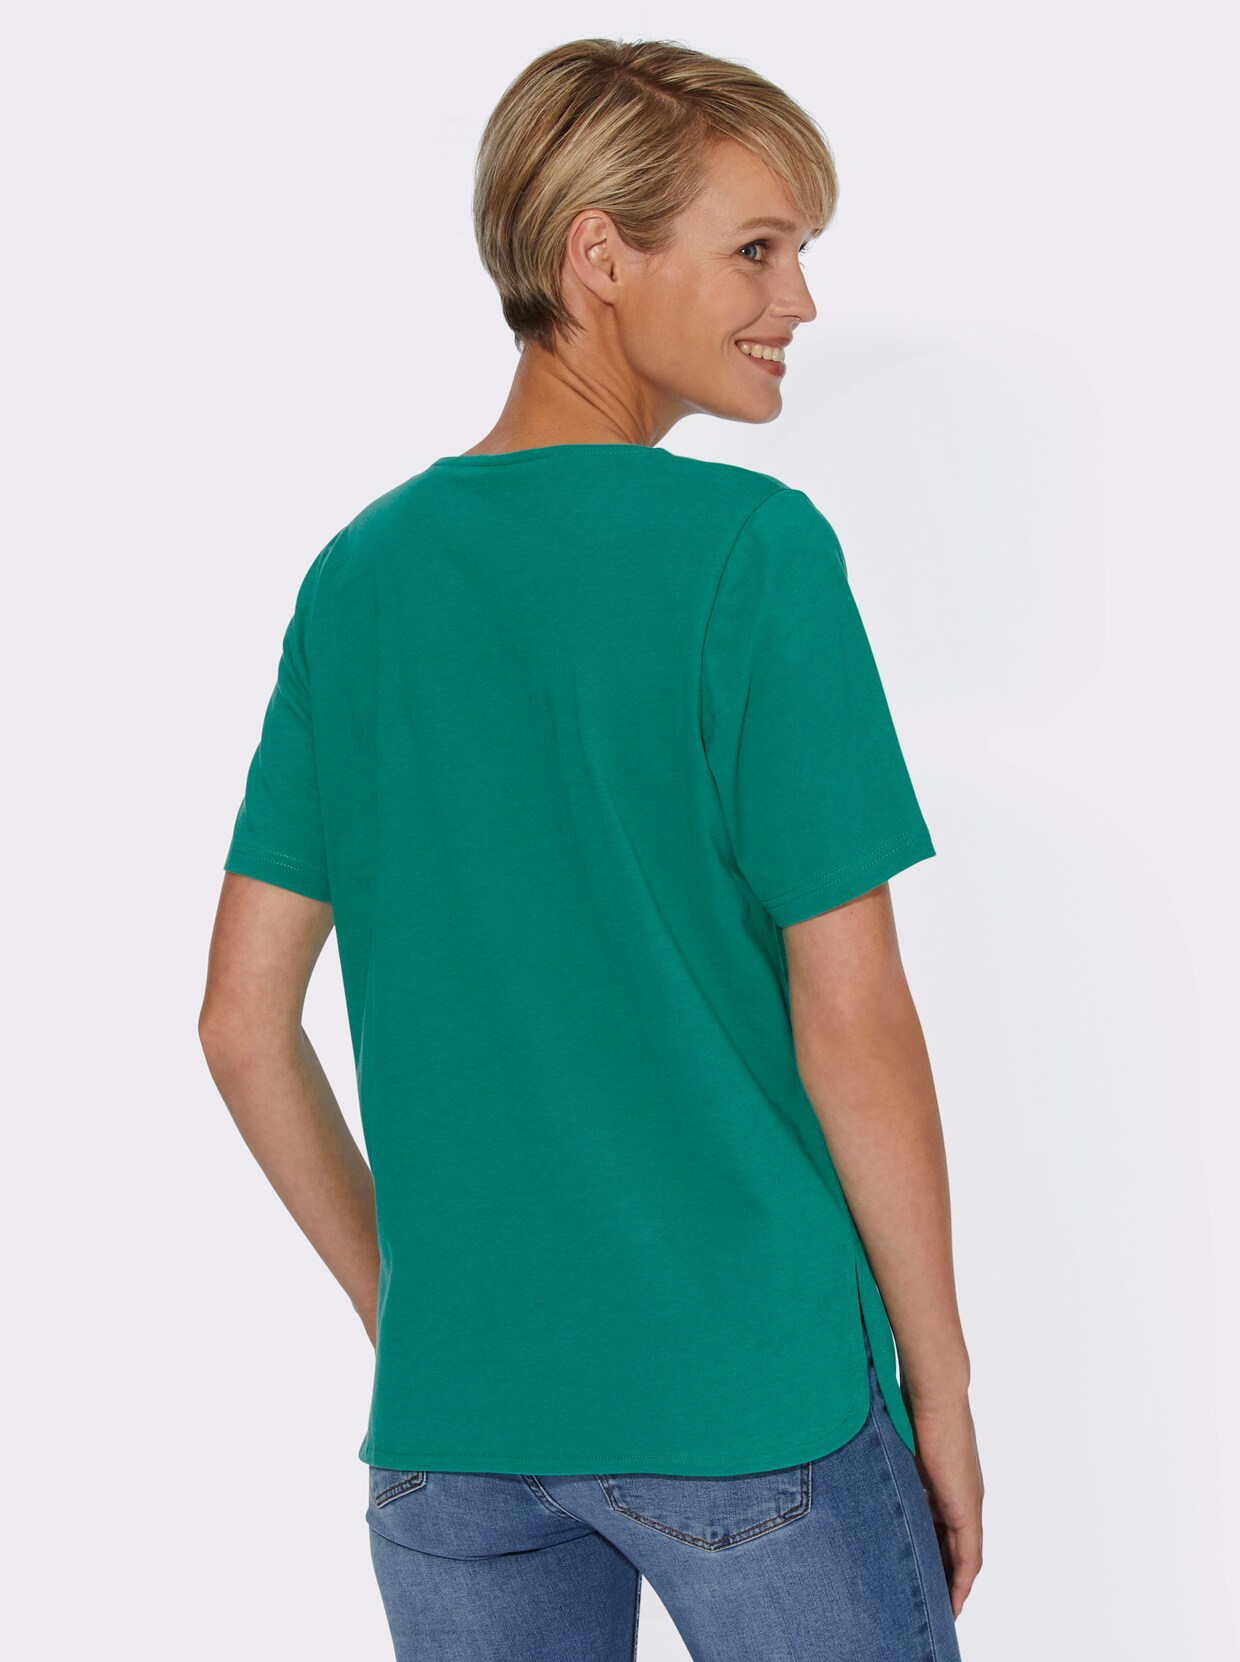 Tričko s krátkým rukávem - smaragdová